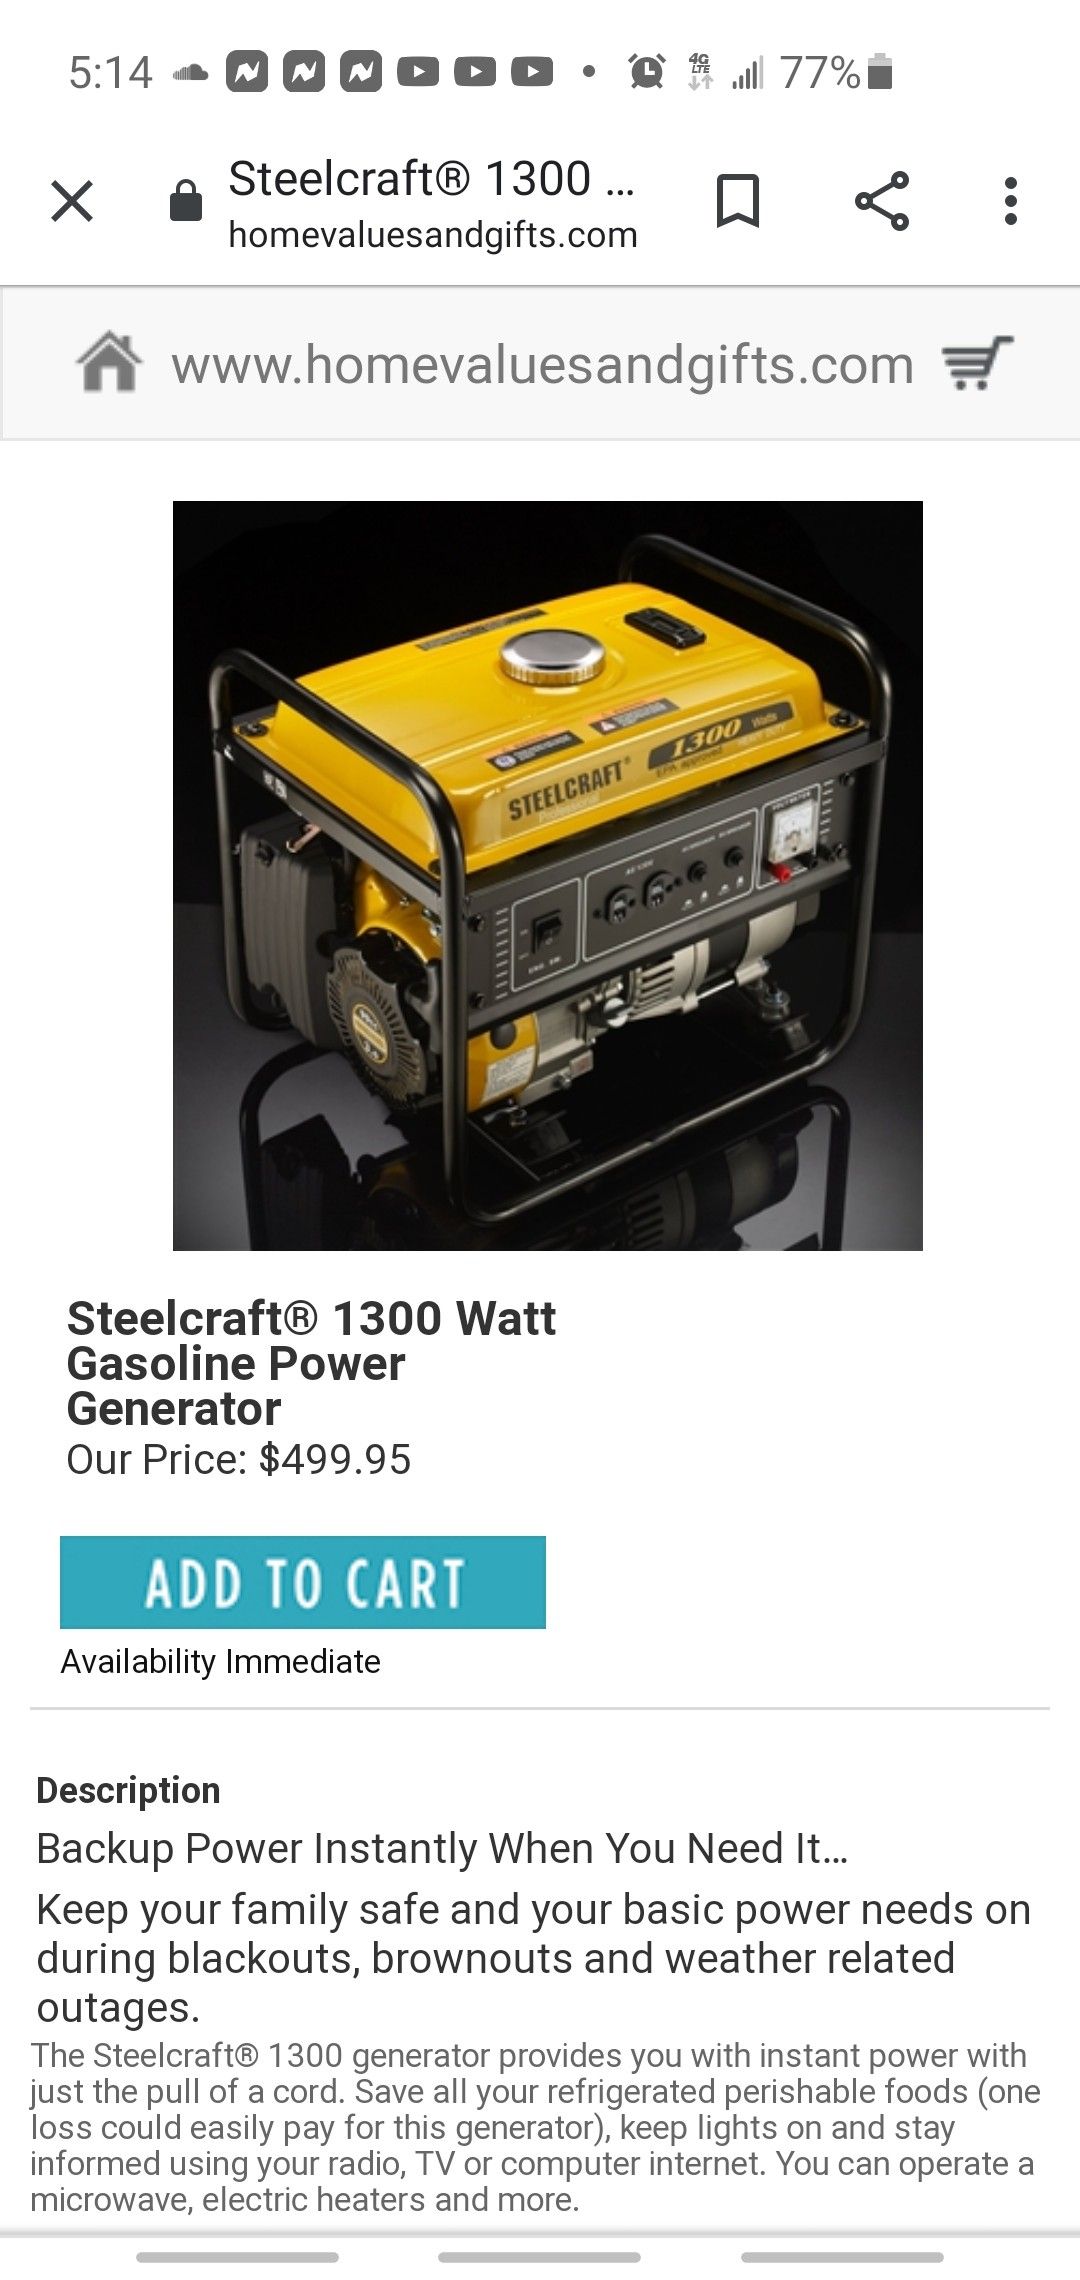 Steel craft generator 1300 watts , gas powered